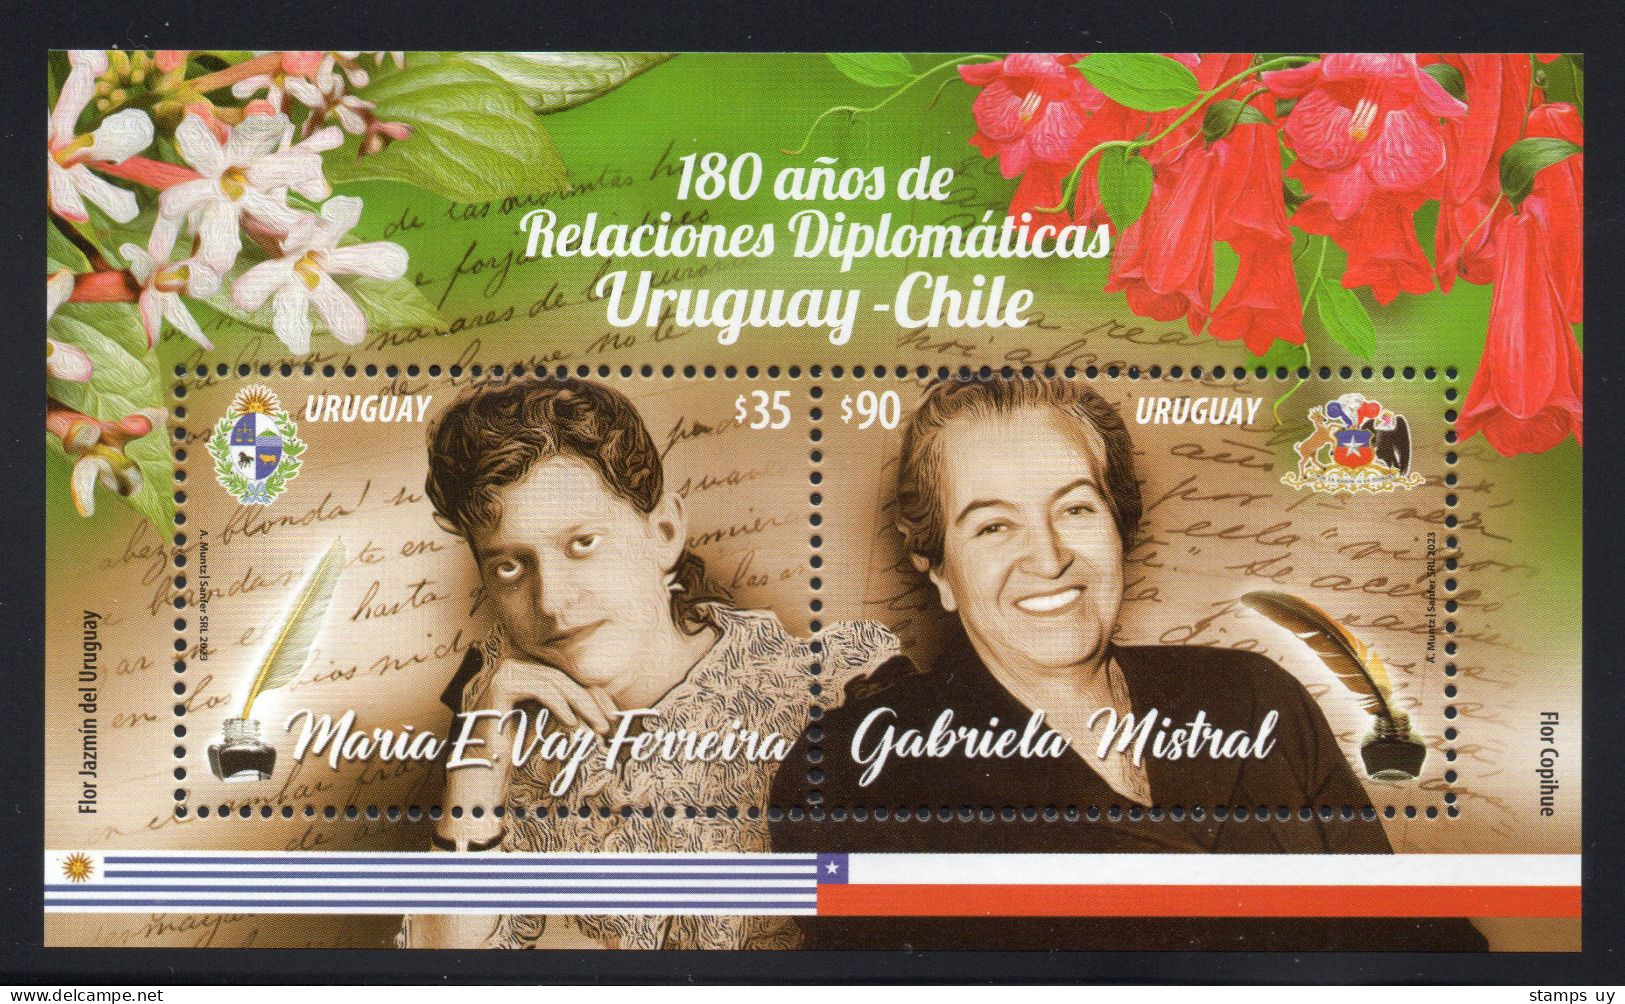 URUGUAY 2023 (Diplomacy, Chile, Poets, M E Vaz Ferreira, Gabriela Mistral, Nobel Prize, Literature, Flowers) - 1 Block - Postzegels